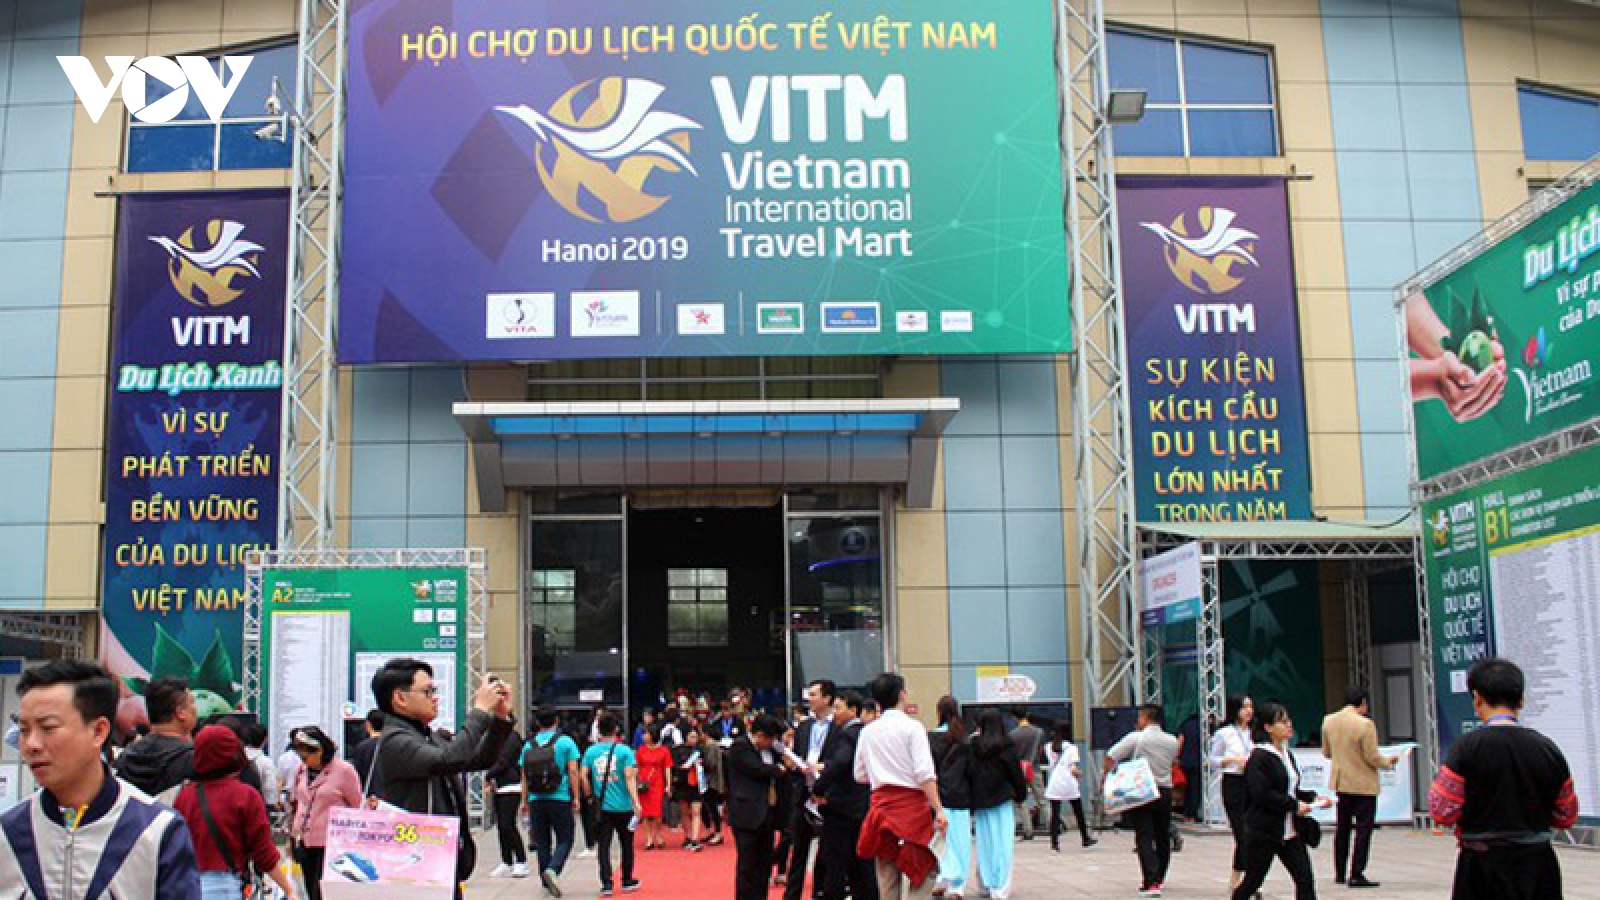 VITM 2020 promotes IT application in tourism services